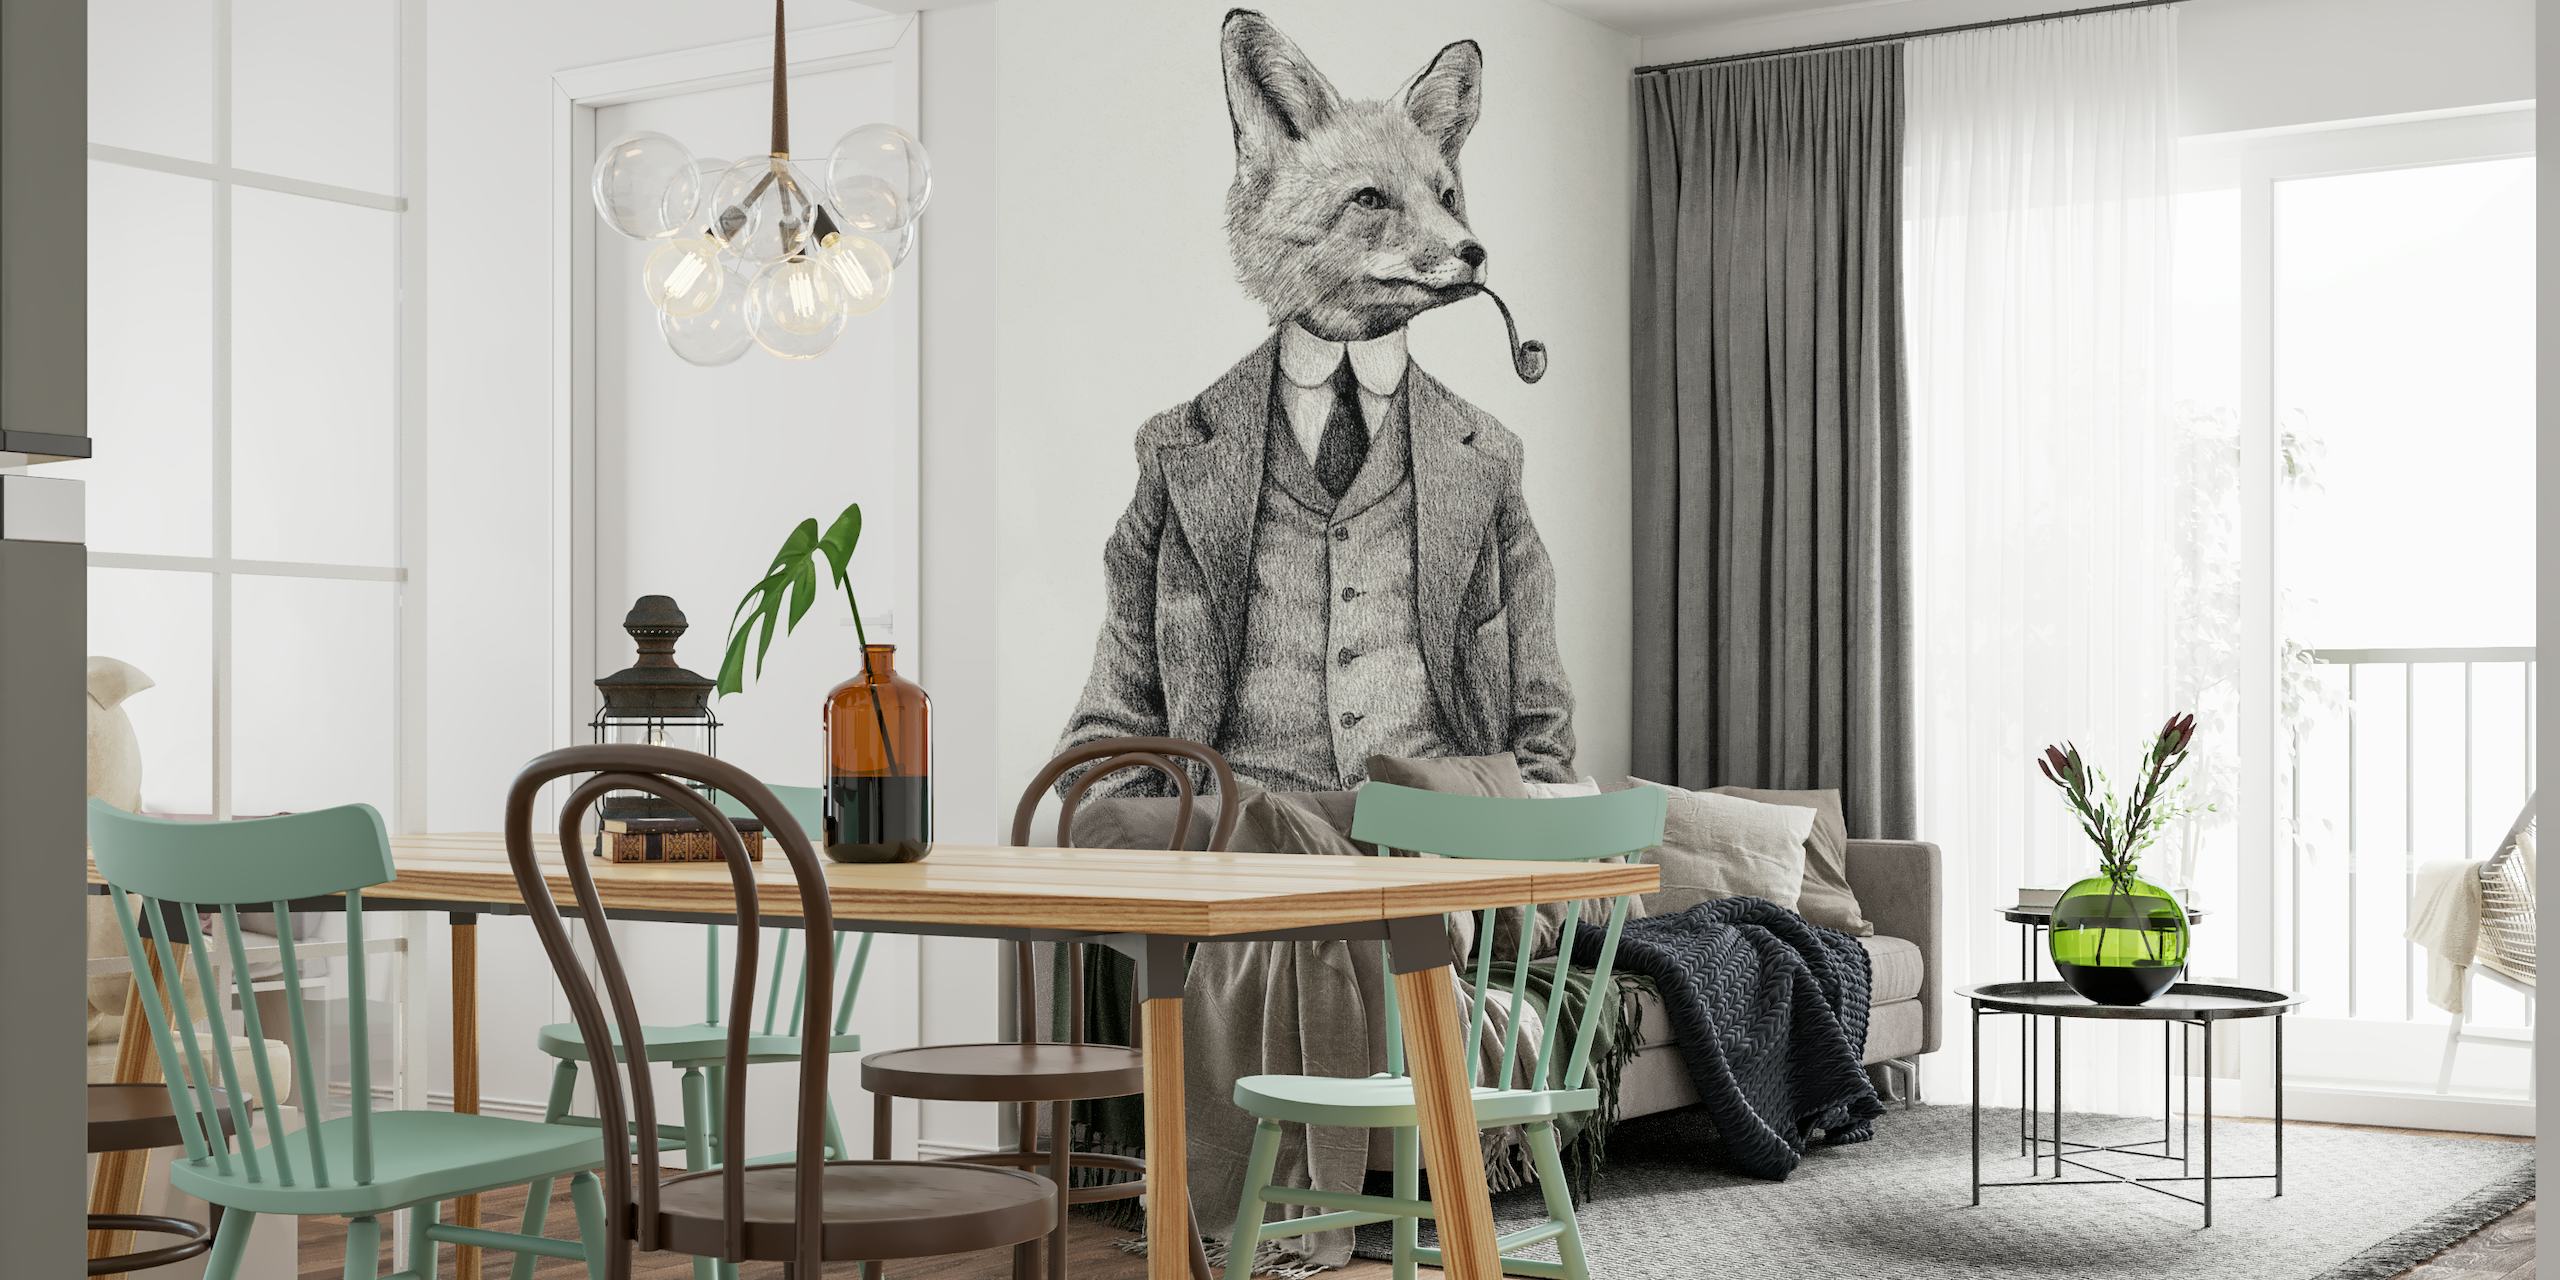 The Fox wallpaper